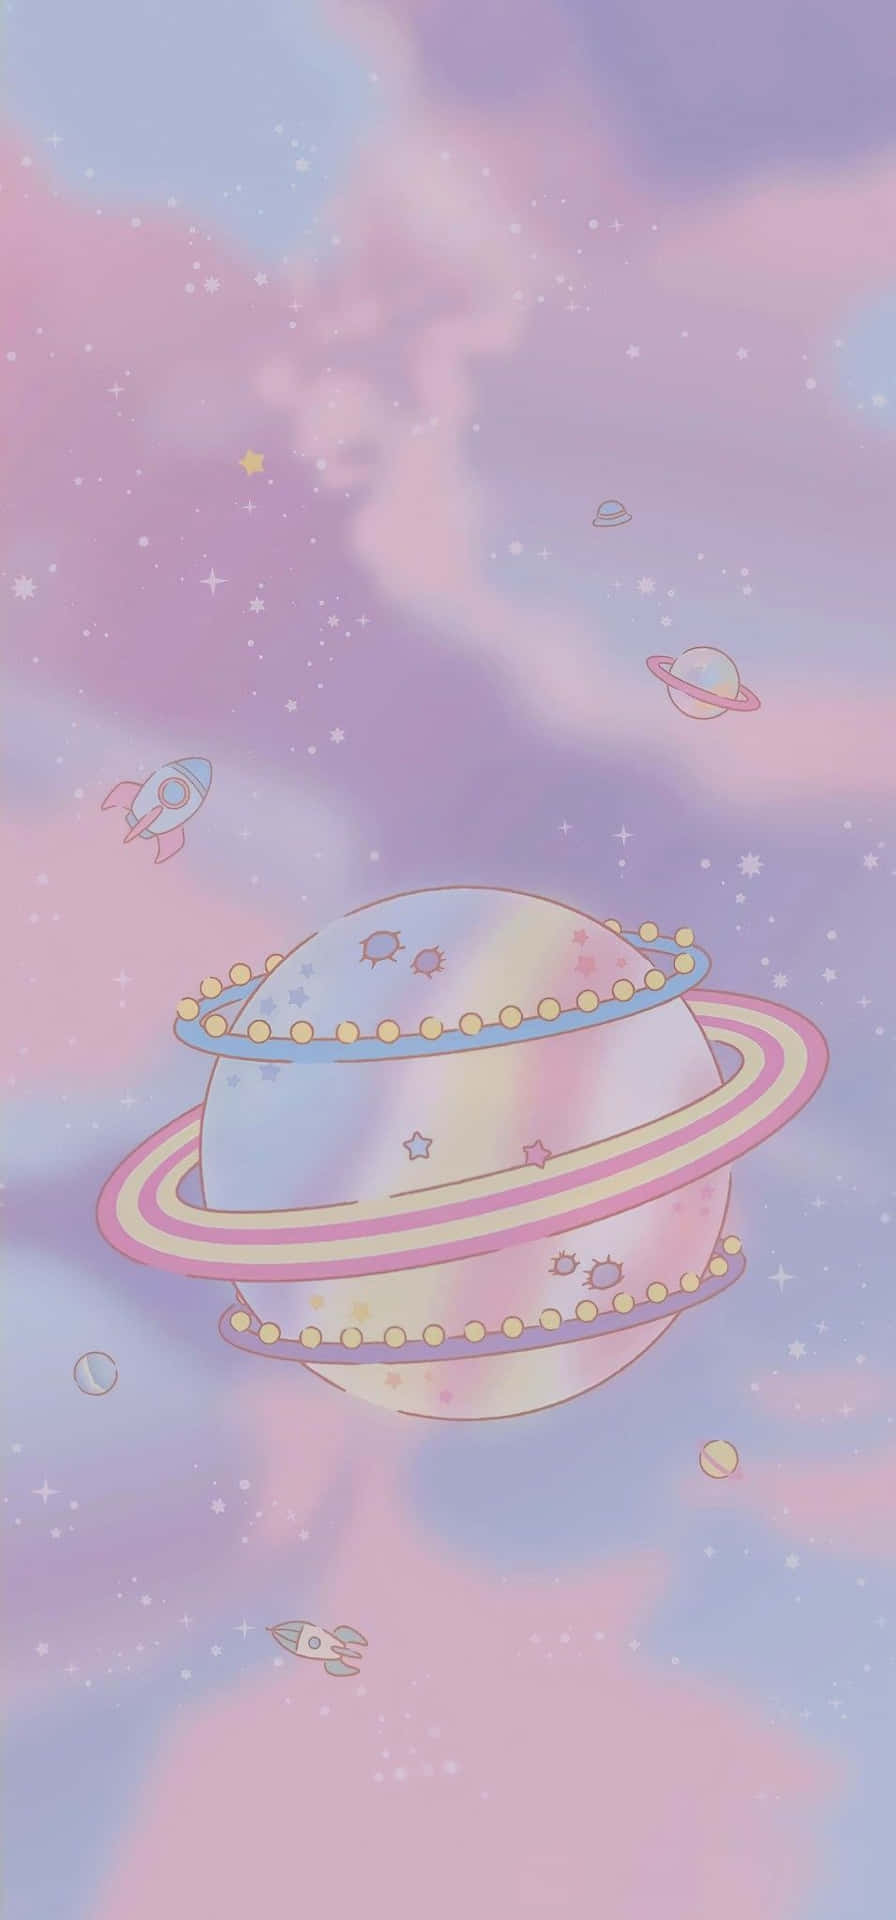 Pastel Space Ring Planet Aesthetic.jpg Wallpaper